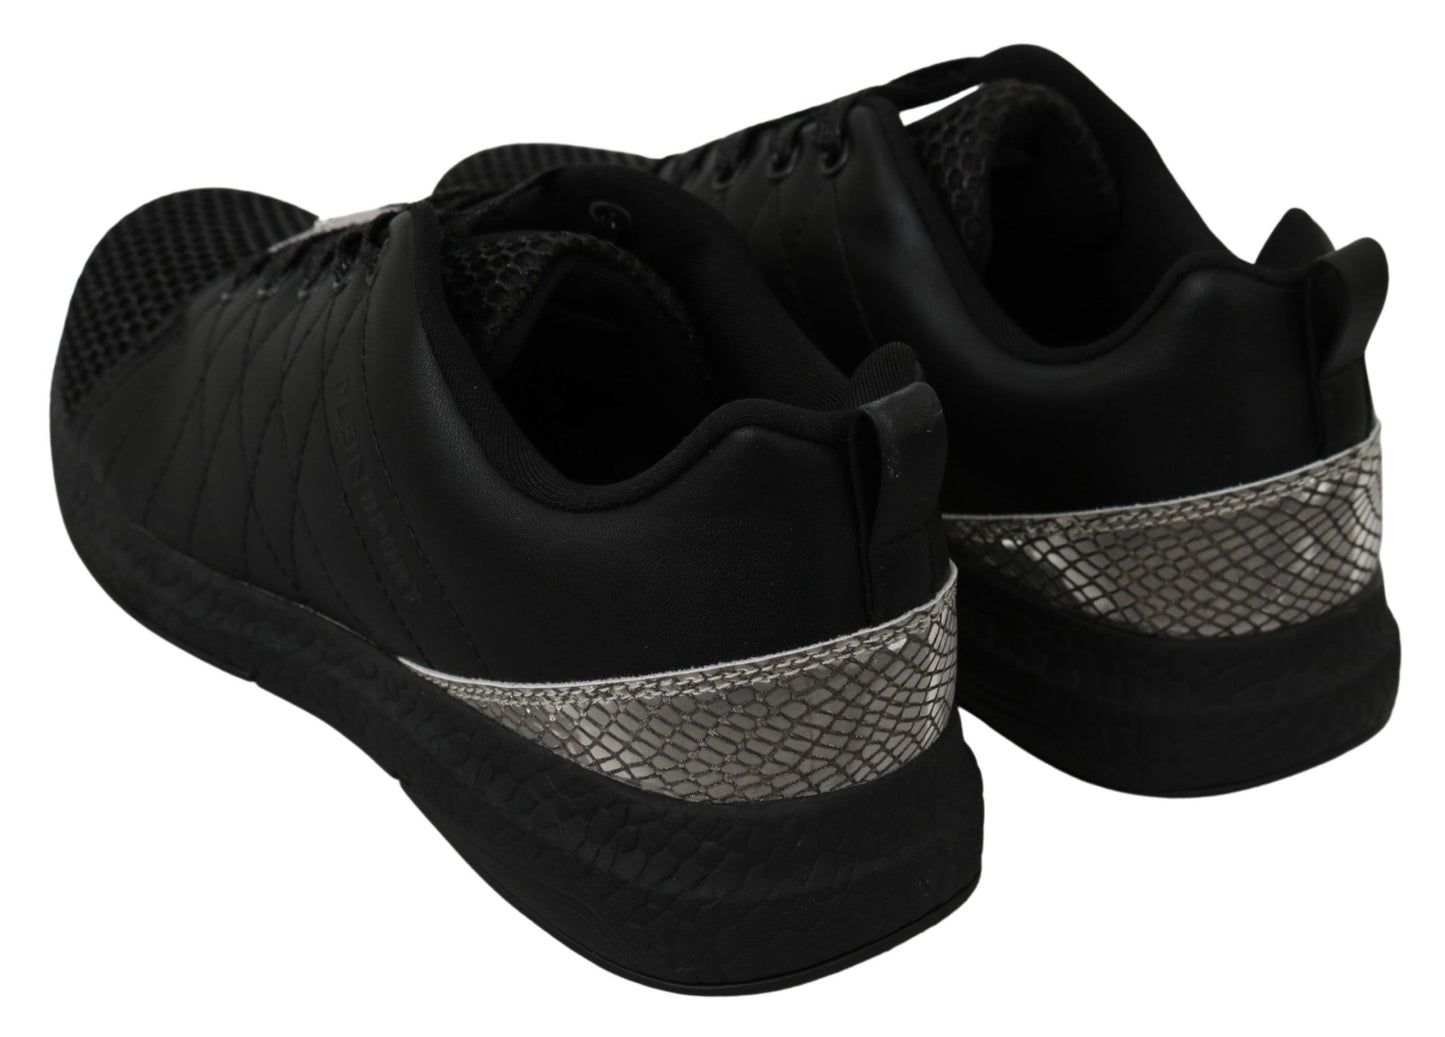 Philipp Plein Black Casual Running Sneakers Chaussures